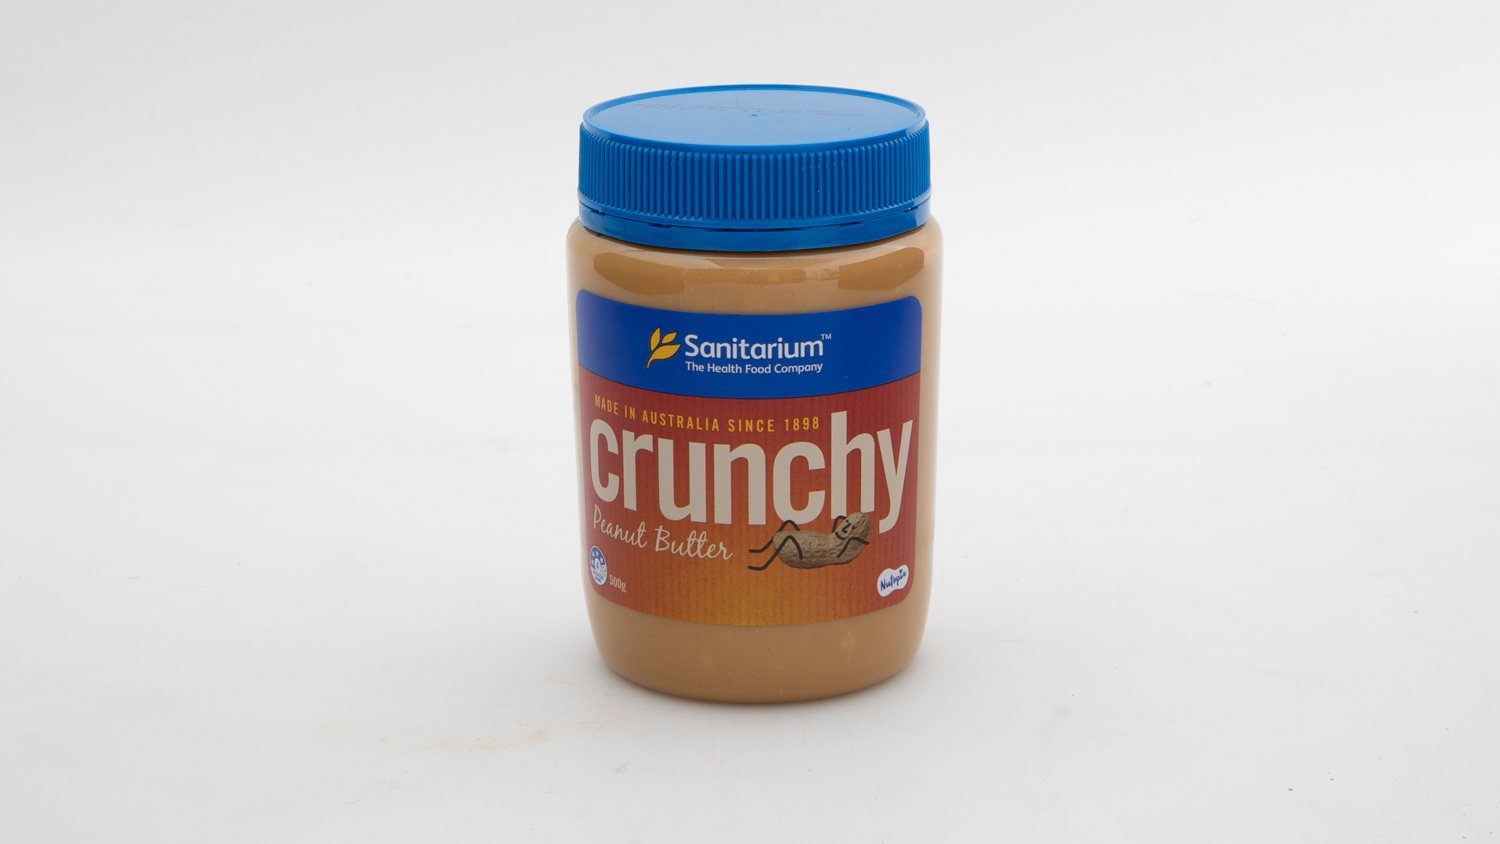 Sanitarium Peanut Butter Crunchy carousel image